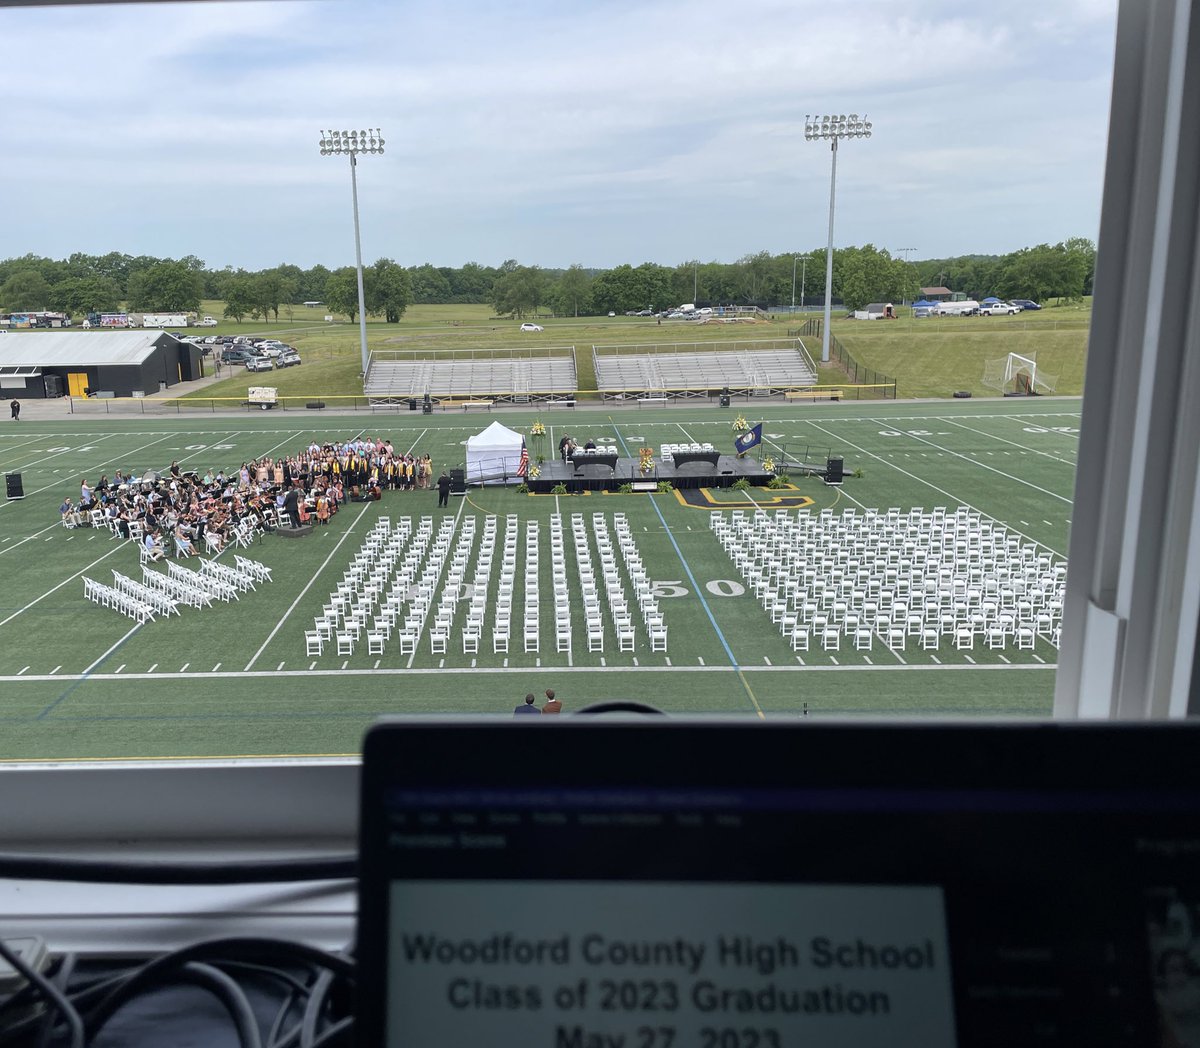 Congrats to the Class of 2023 Graduates! @WoodfordCoPS #KidsWin